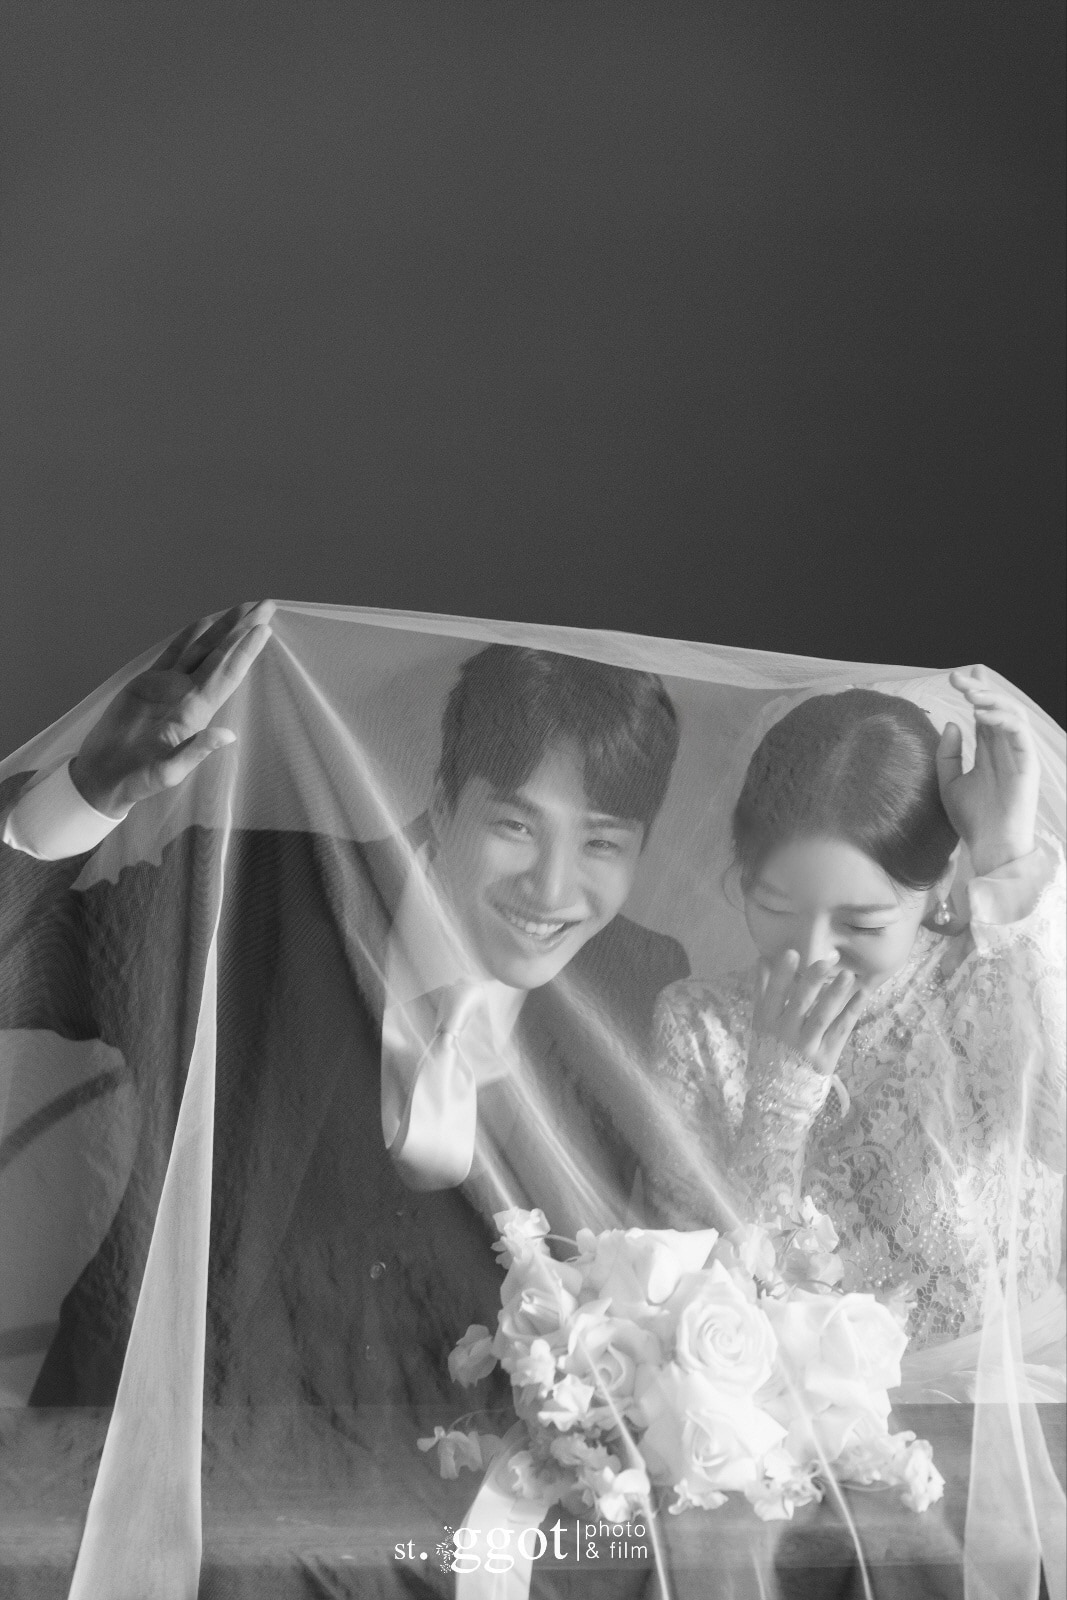 Комик Ким Ки Ли и актриса Мун Джи Ин поделились свадебными фото